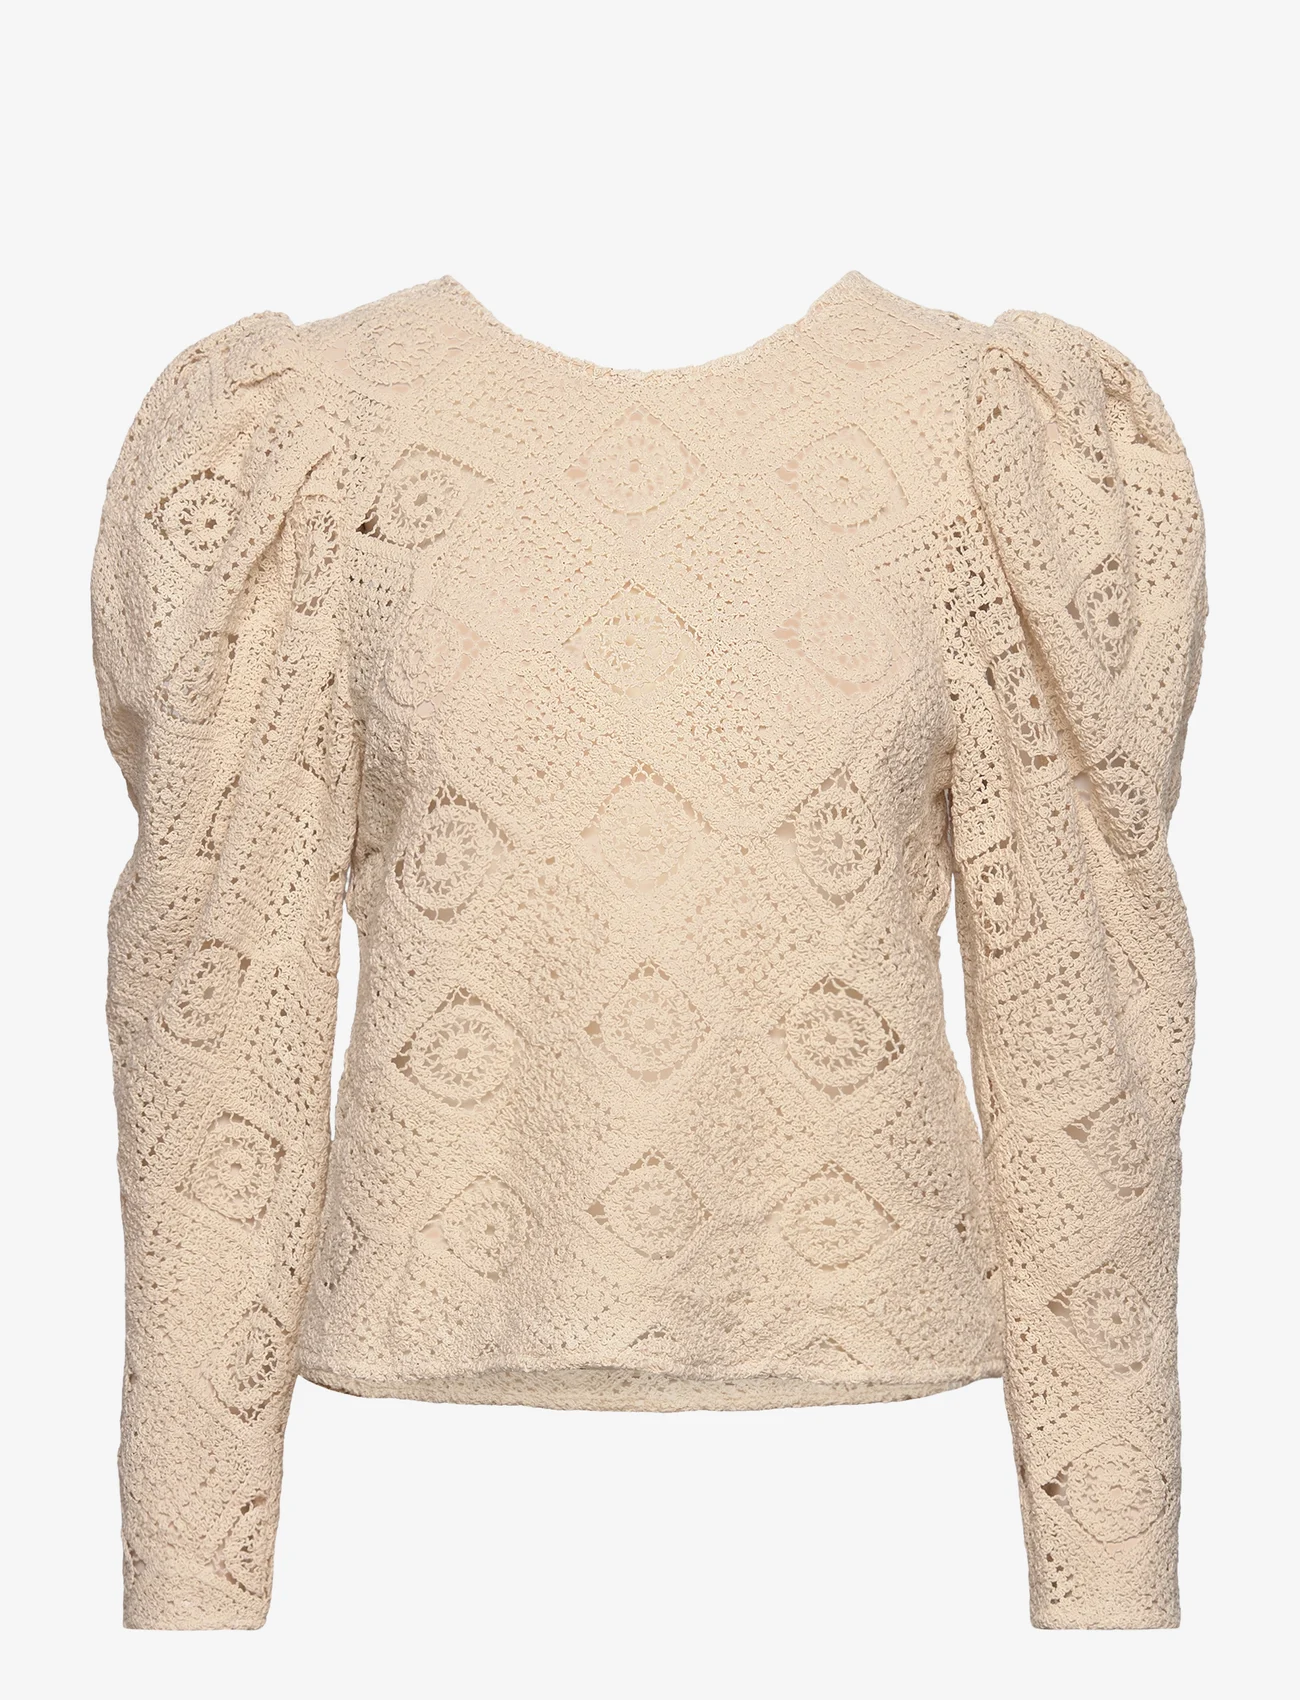 MAUD - Kelis lace blouse - long-sleeved blouses - sand - 0